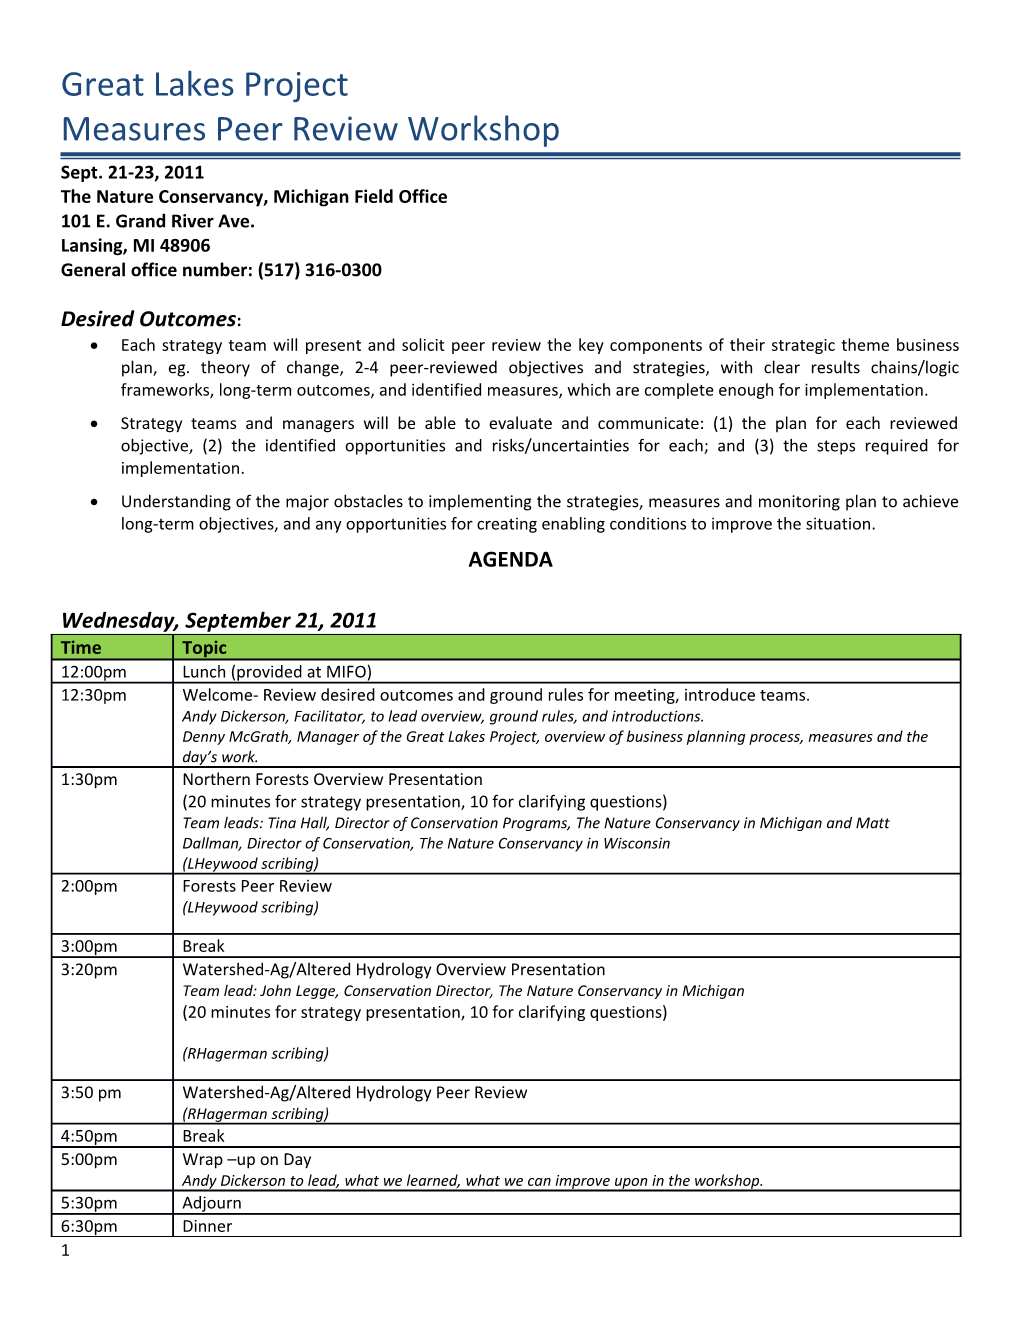 Measures Workshop - Great Lakes - Agenda